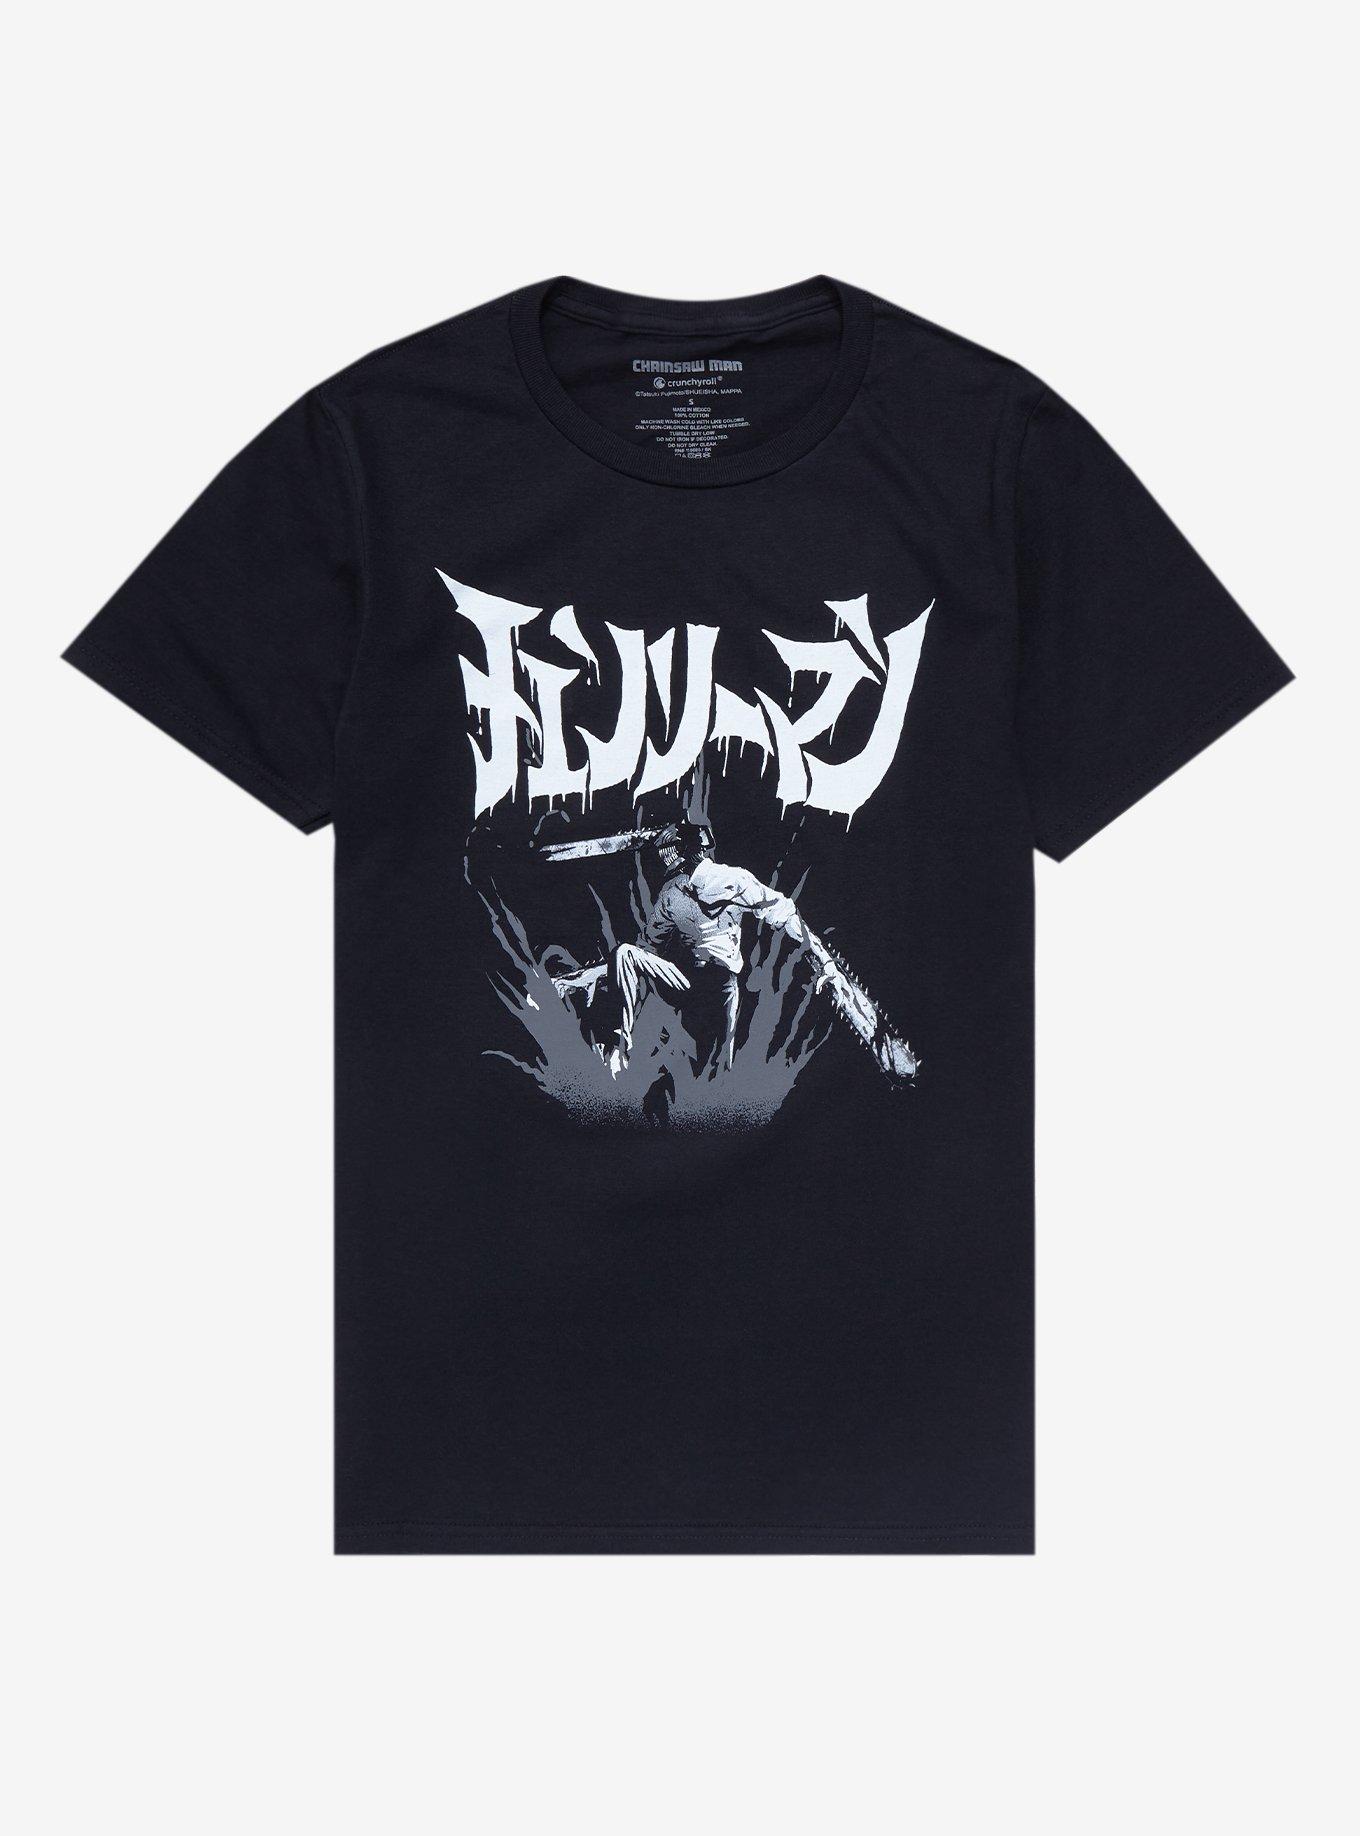 Chainsaw Man Black & White Japanese Text Boyfriend Fit Girls T-Shirt, MULTI, hi-res